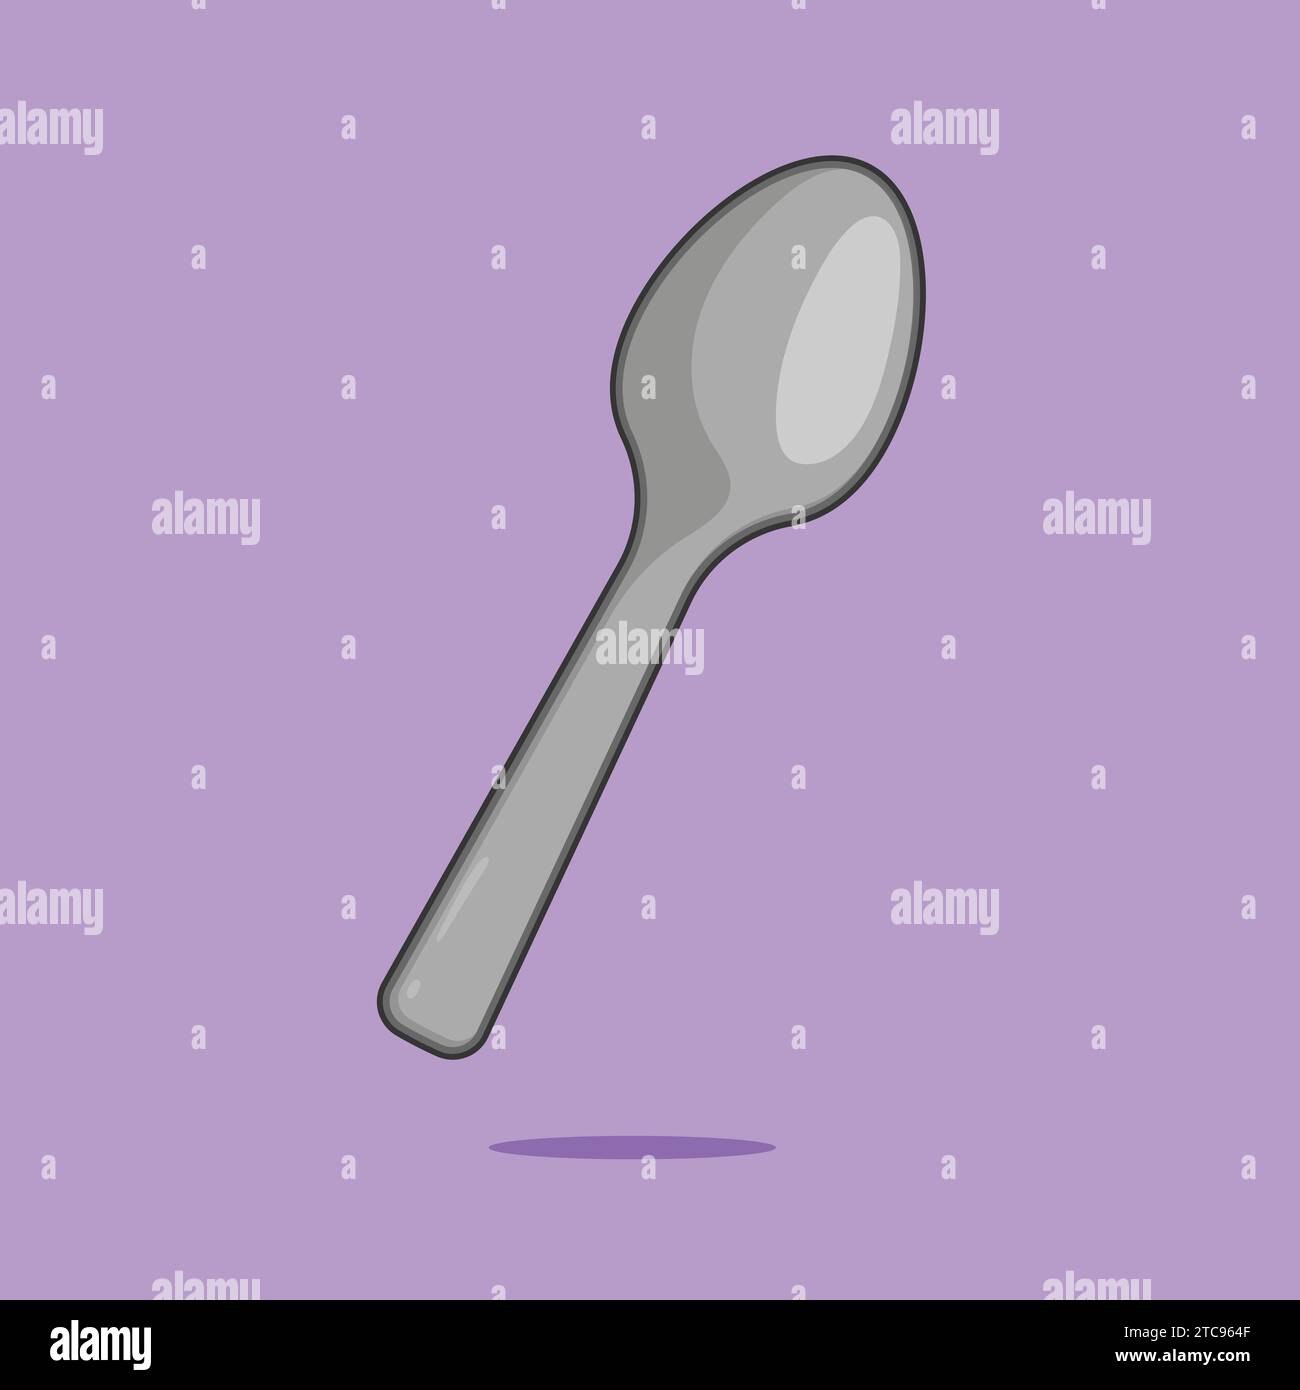 Flat Steel Spoon Icon Vector Illustration Food meal Stock Vector